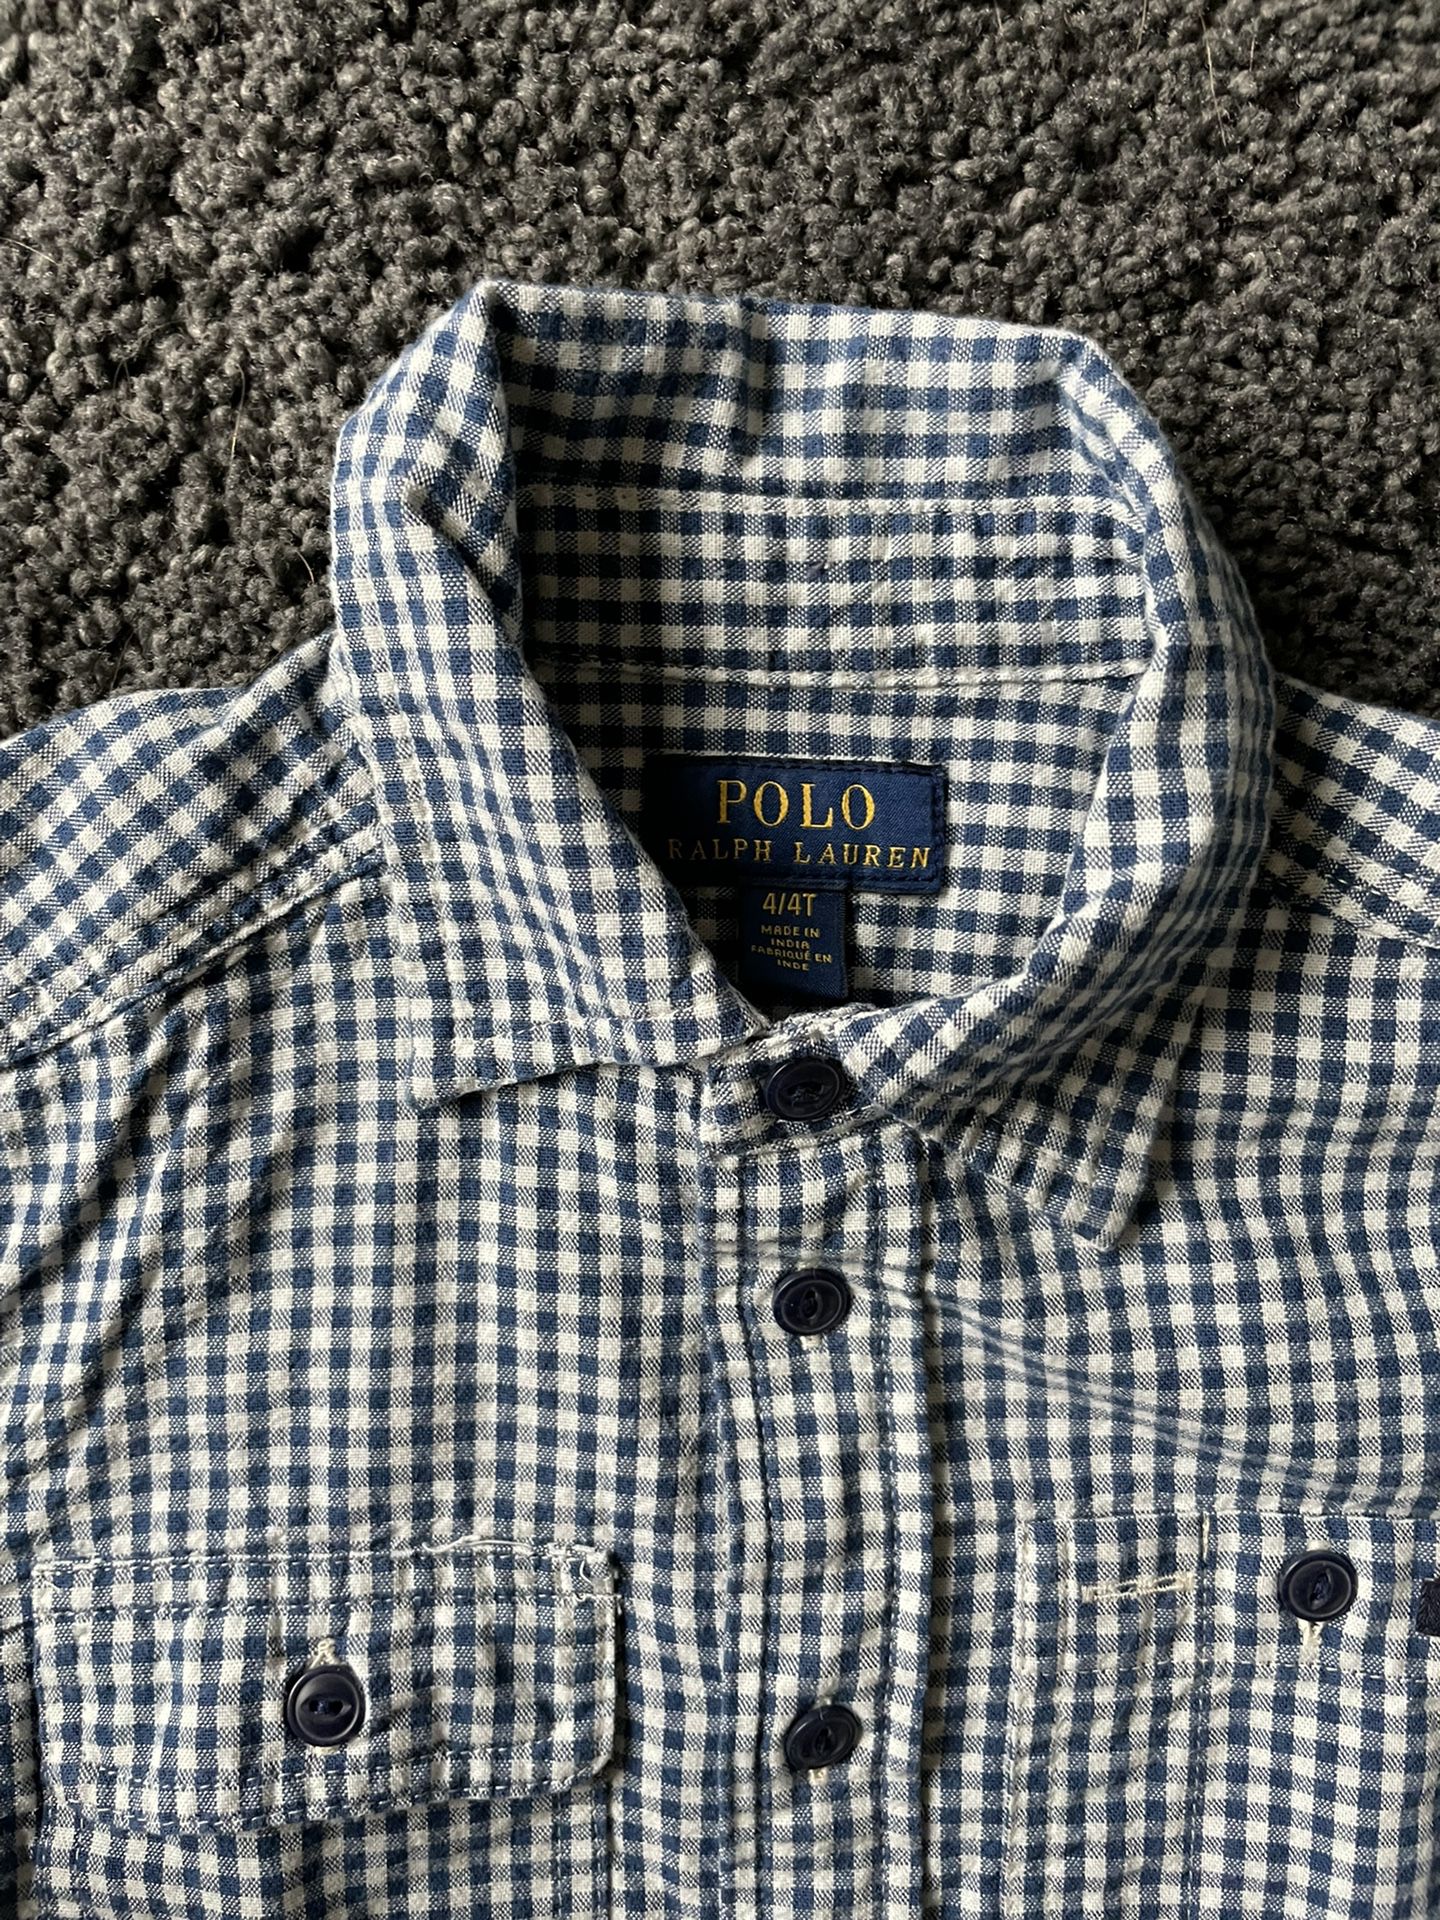 Boys Long Sleeve Button Down Shirt, Size 4 From Polo Ralph Lauren 